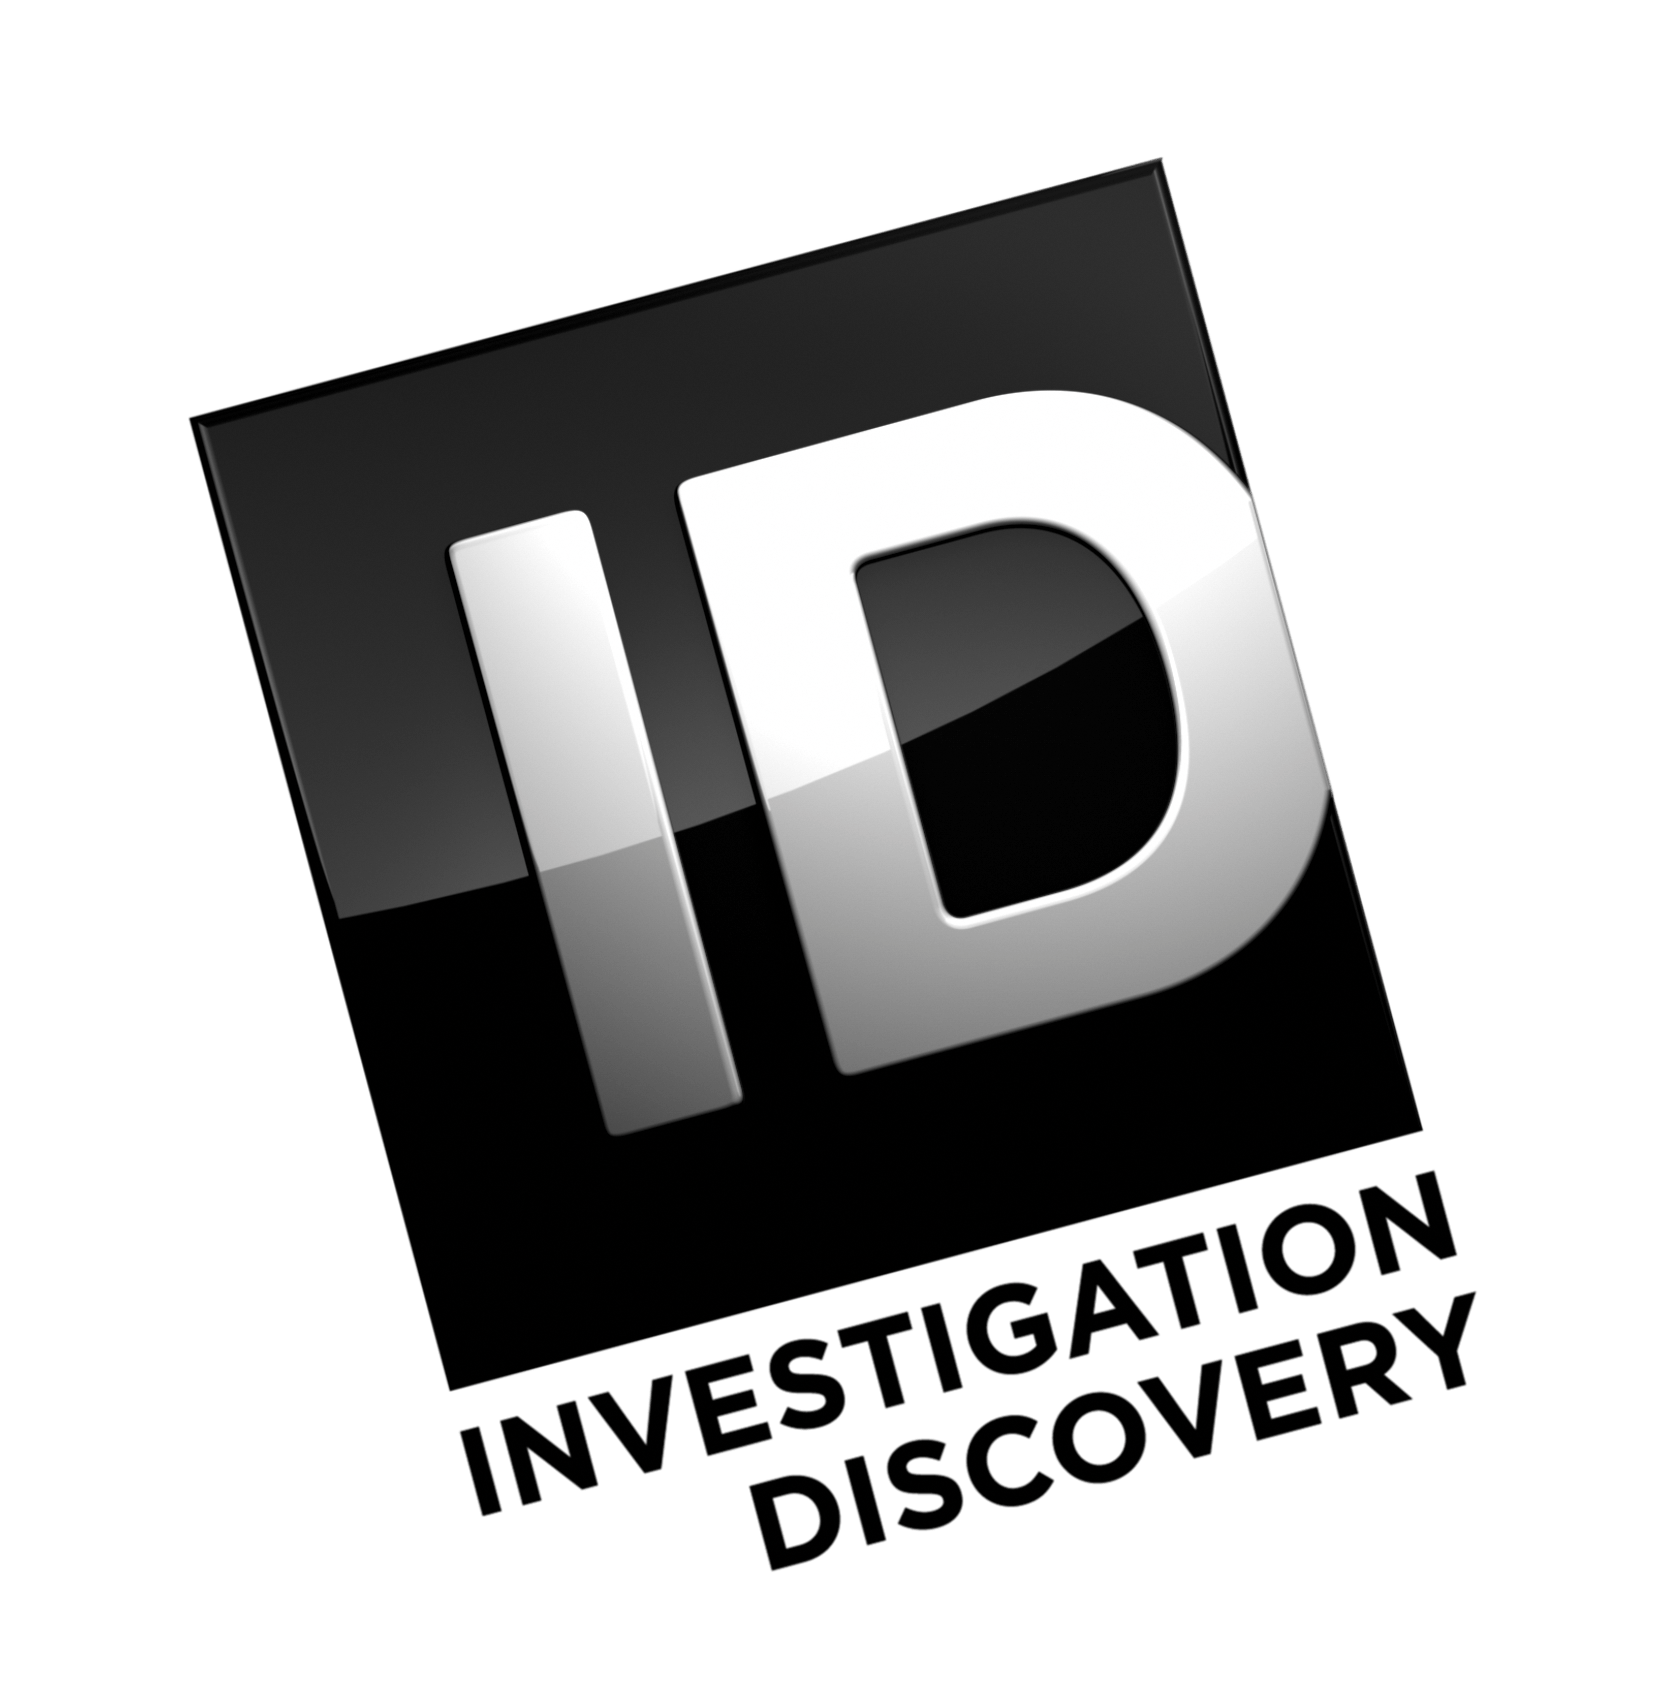 ID Logo - Image - NEW ID logo SD black .png | Logopedia | FANDOM powered by Wikia